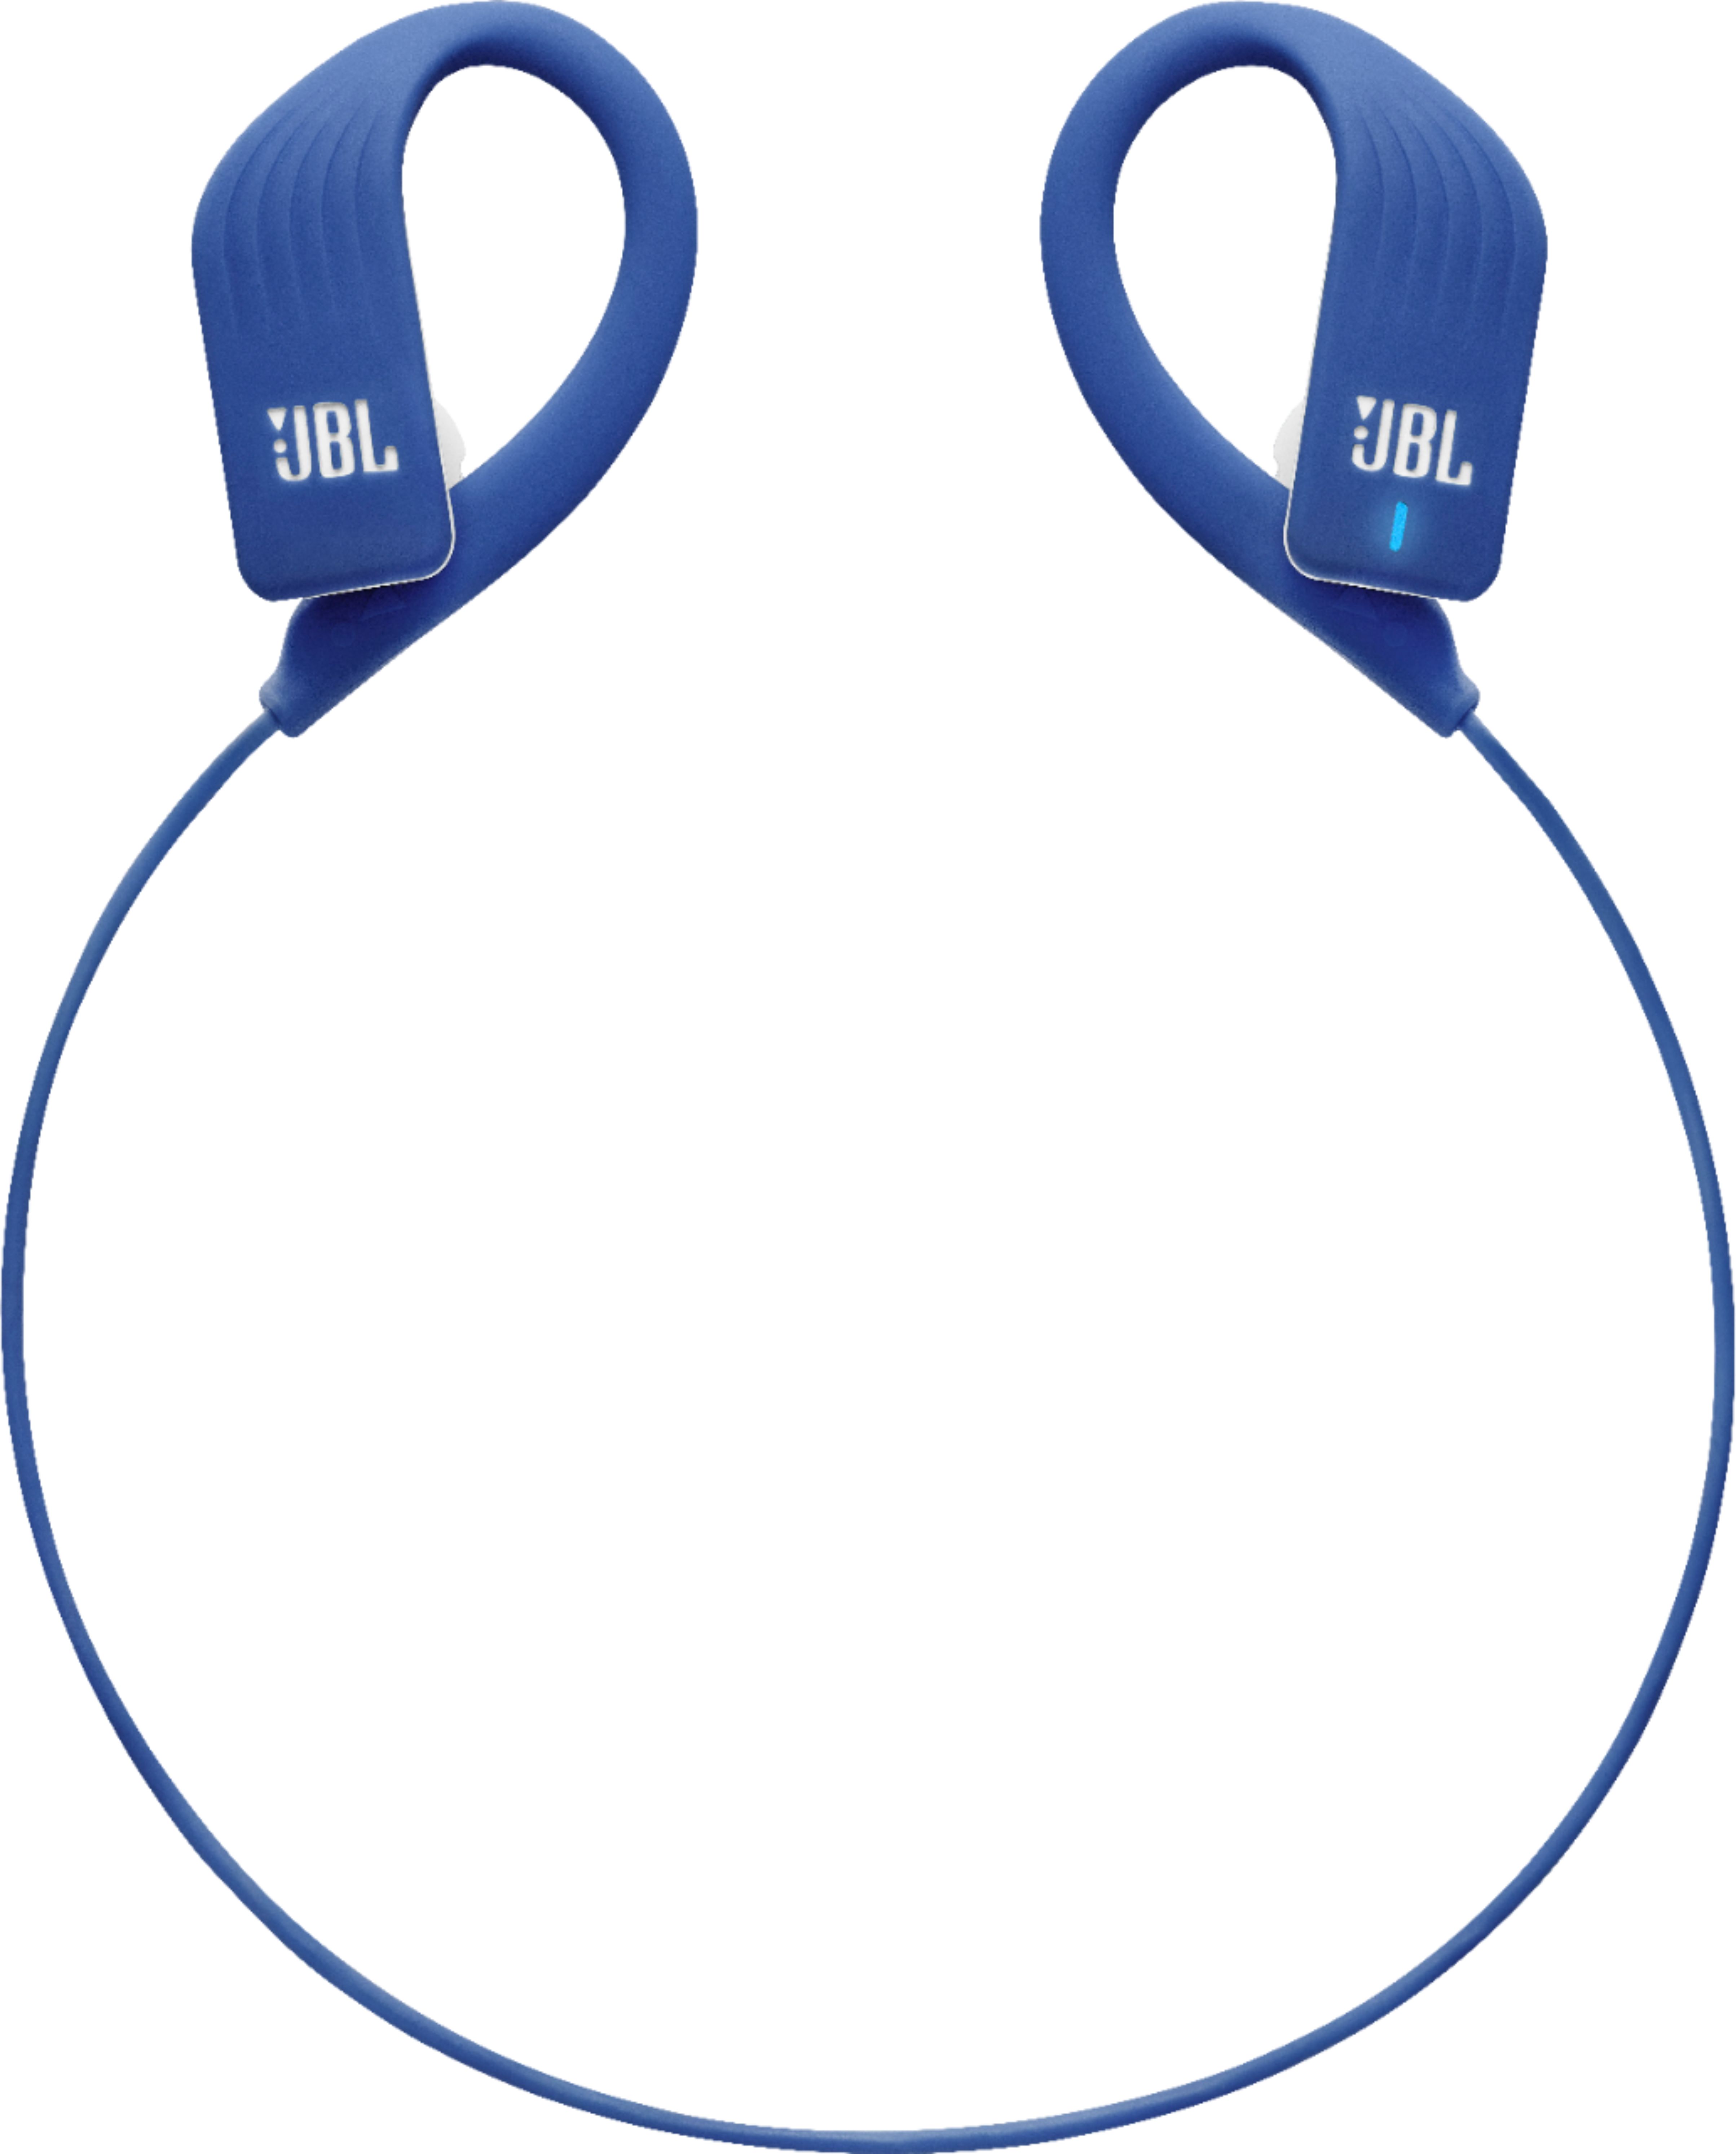 Angle View: JBL - Endurance Sprint Wireless In-Ear Headphones - Blue